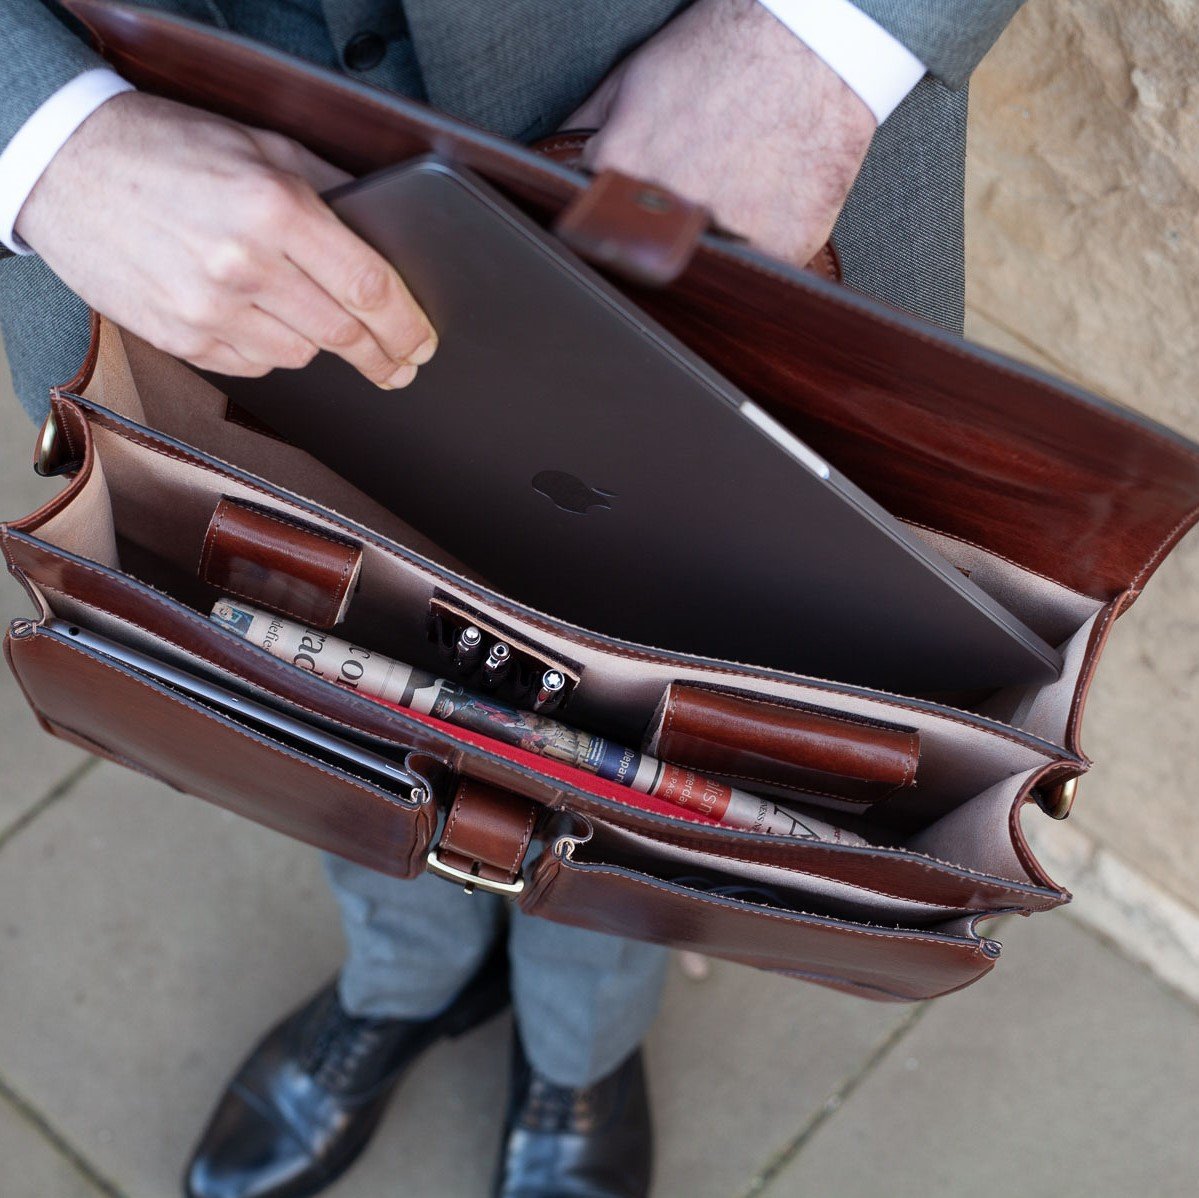 tomacelli briefcase maxwell scott